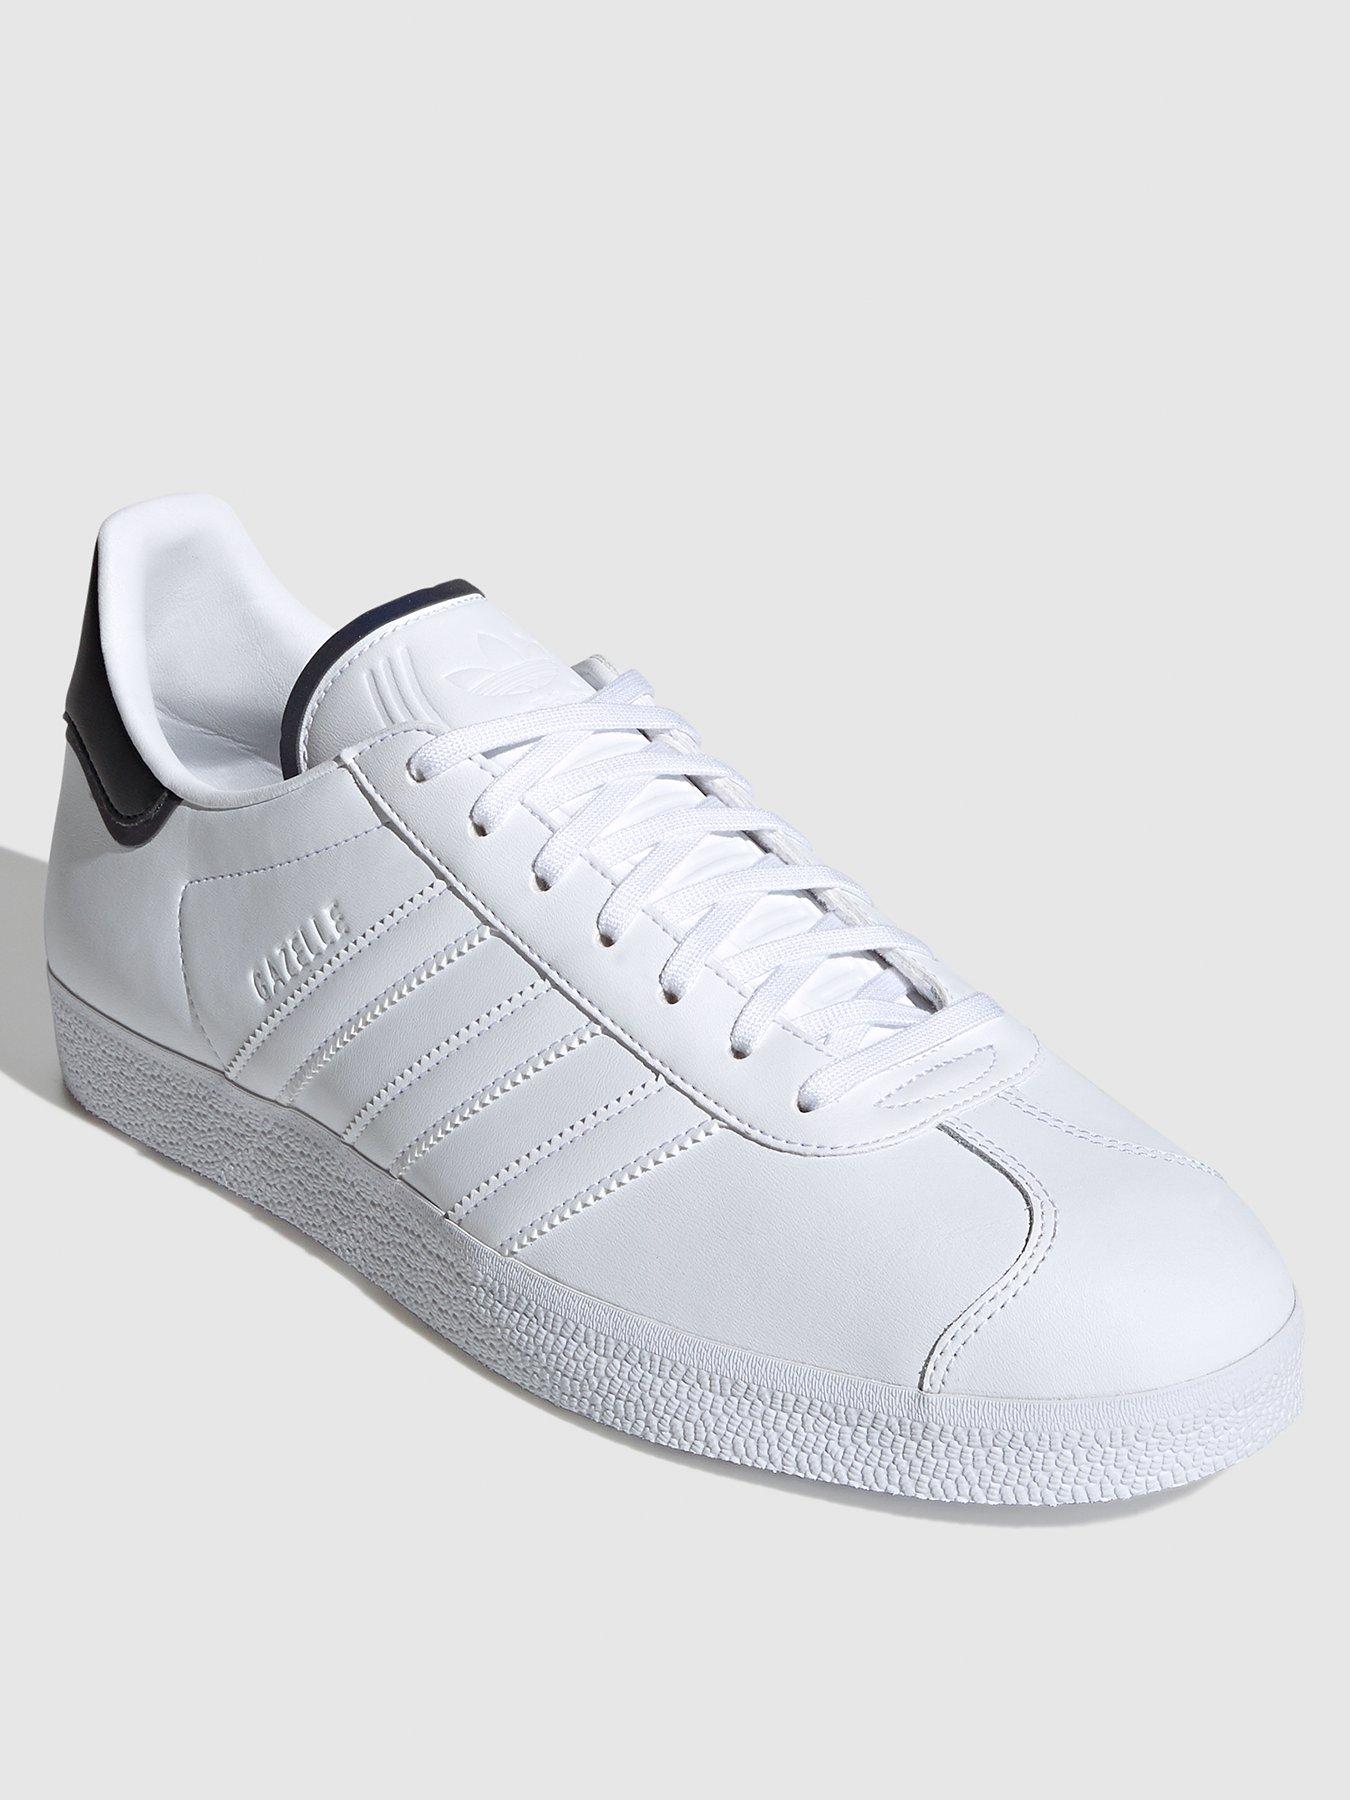 adidas Originals Gazelle - White | very 